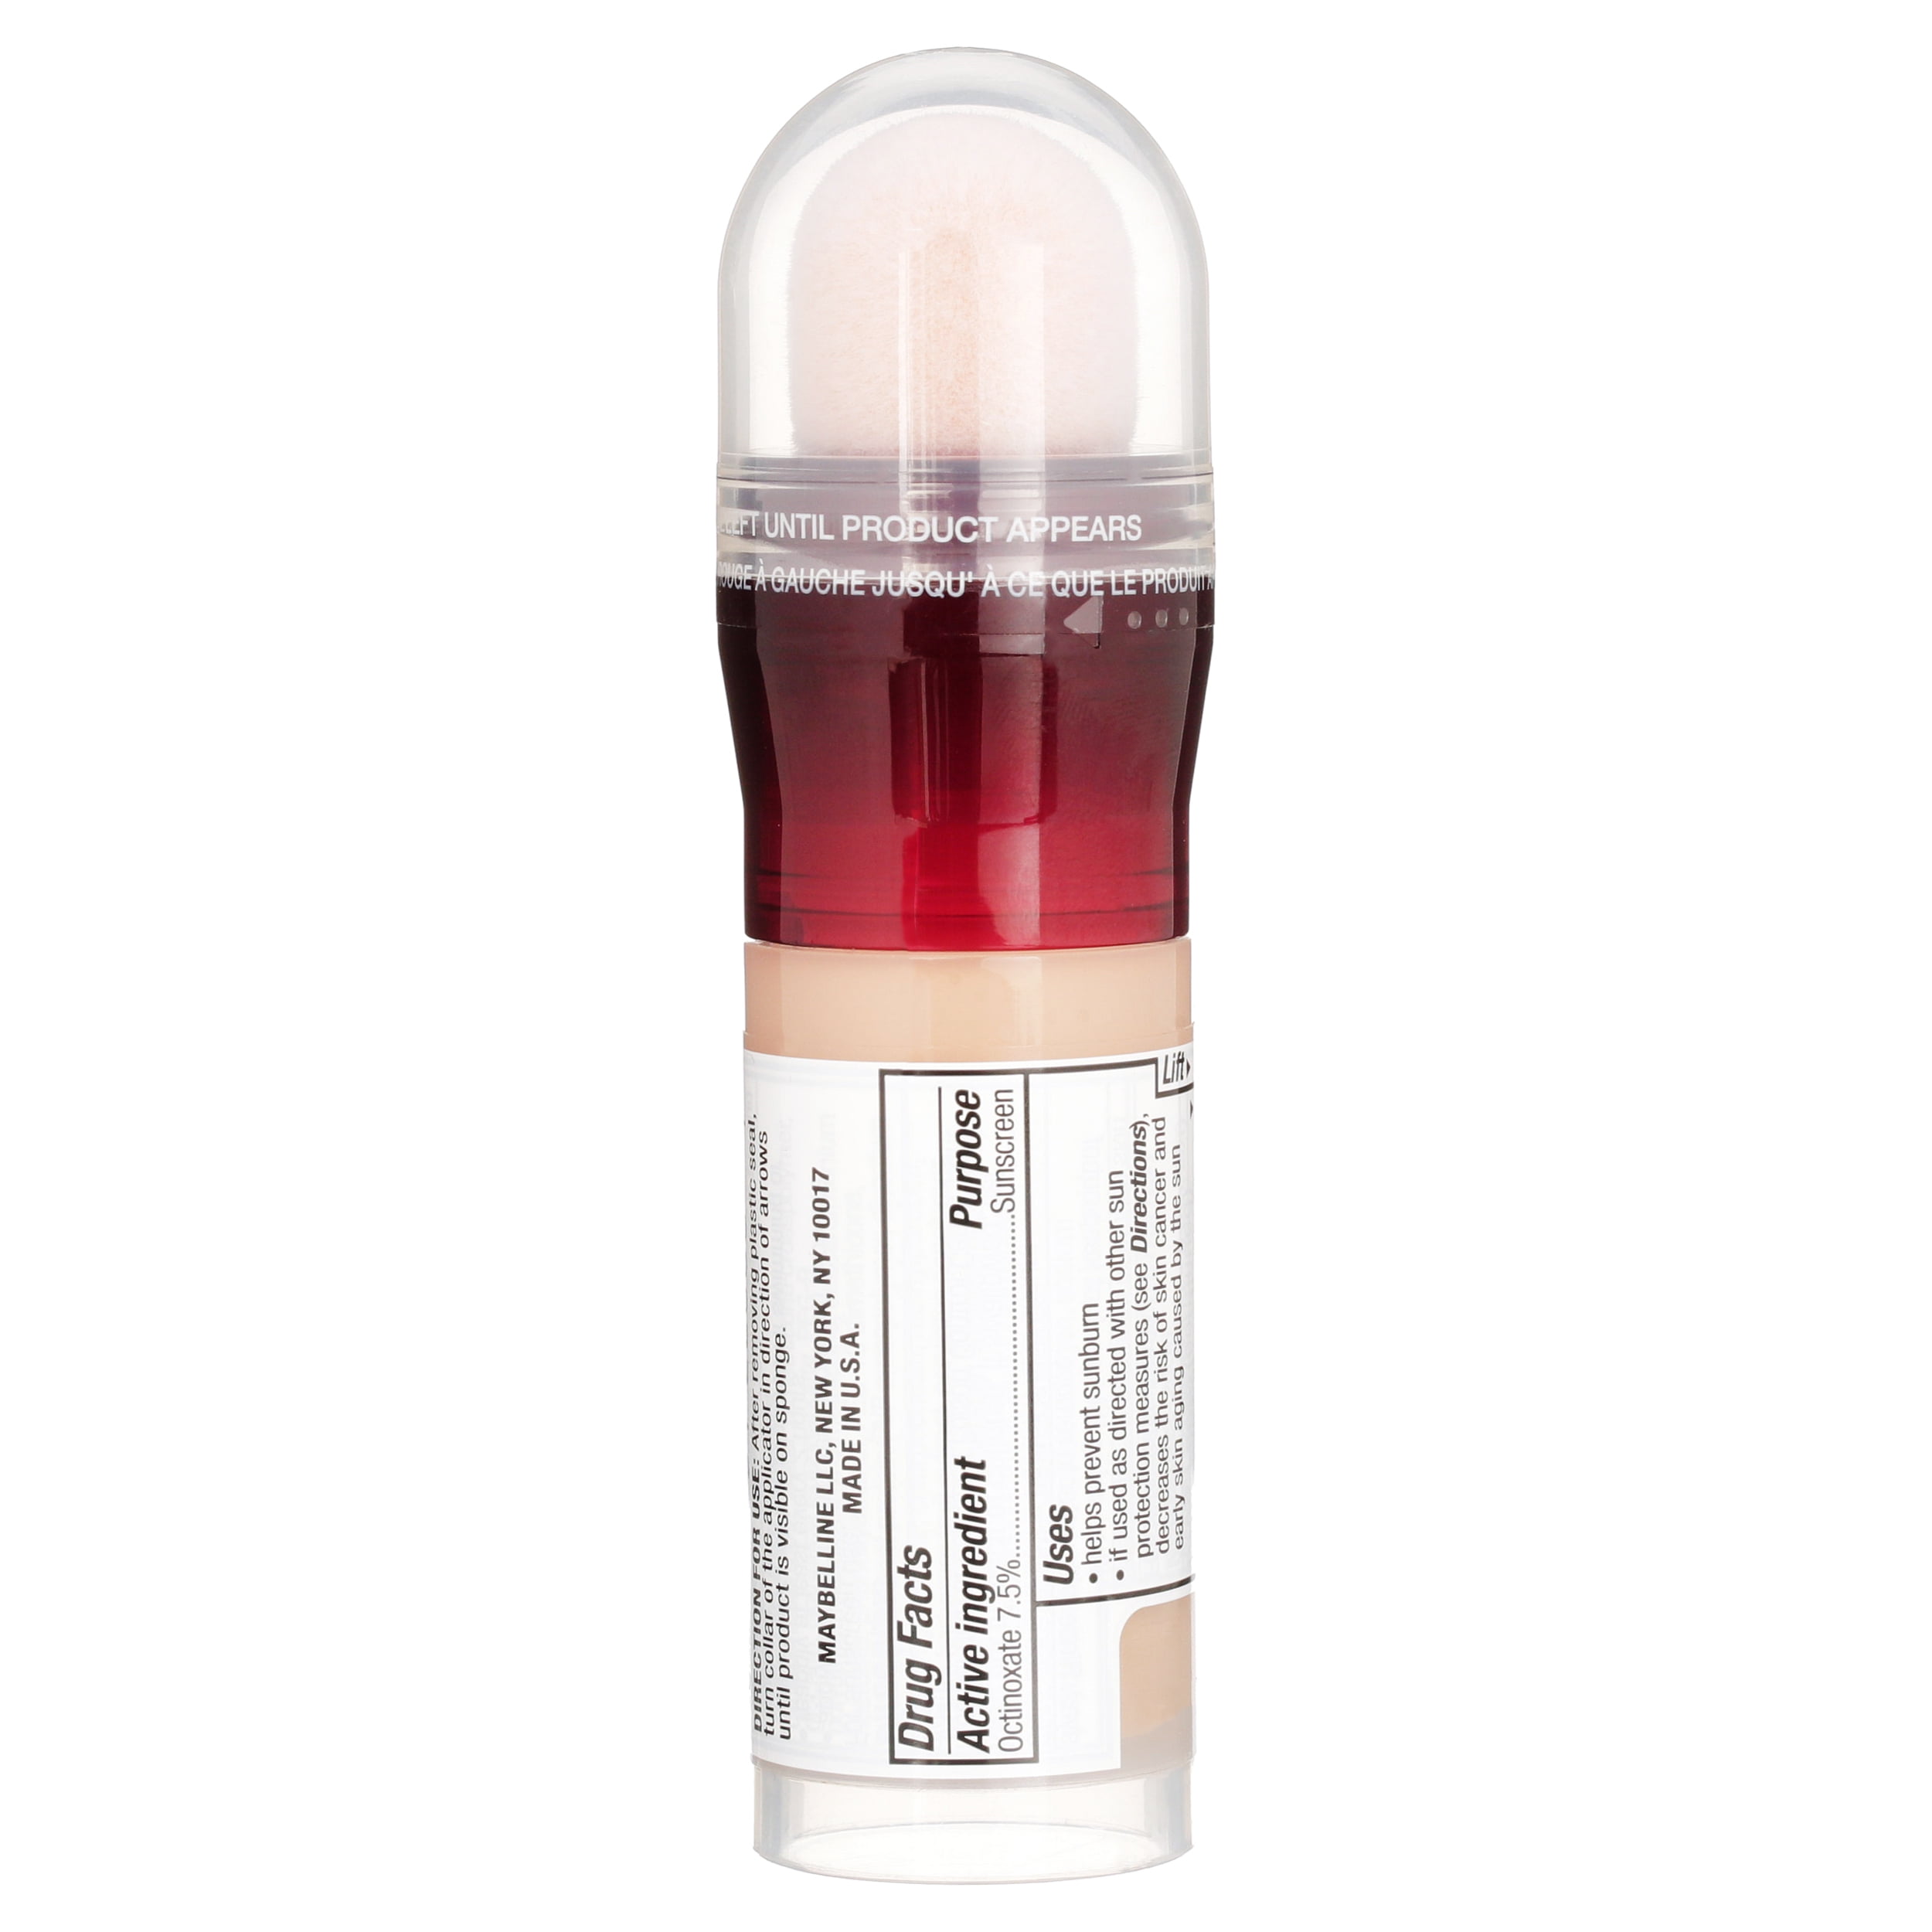 Eraser fl 18, Instant Maybelline Age Treatment Rewind Classic oz Ivory, SPF Makeup, 0.68